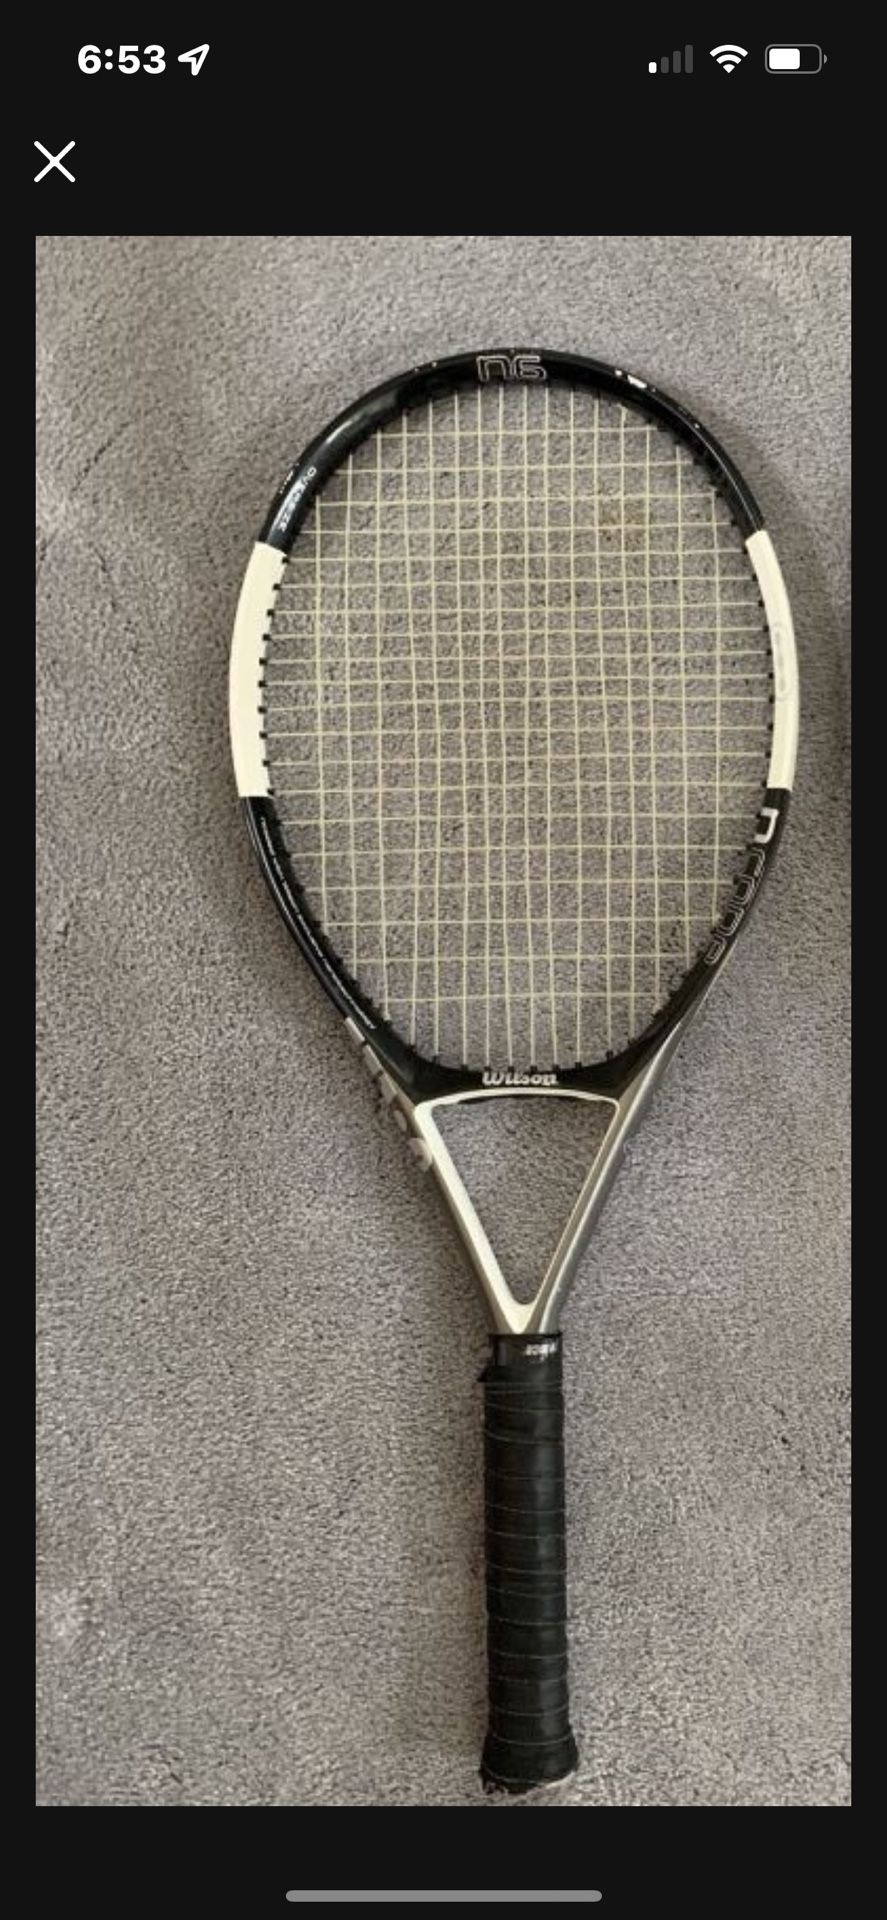 Tennis Racket - $20